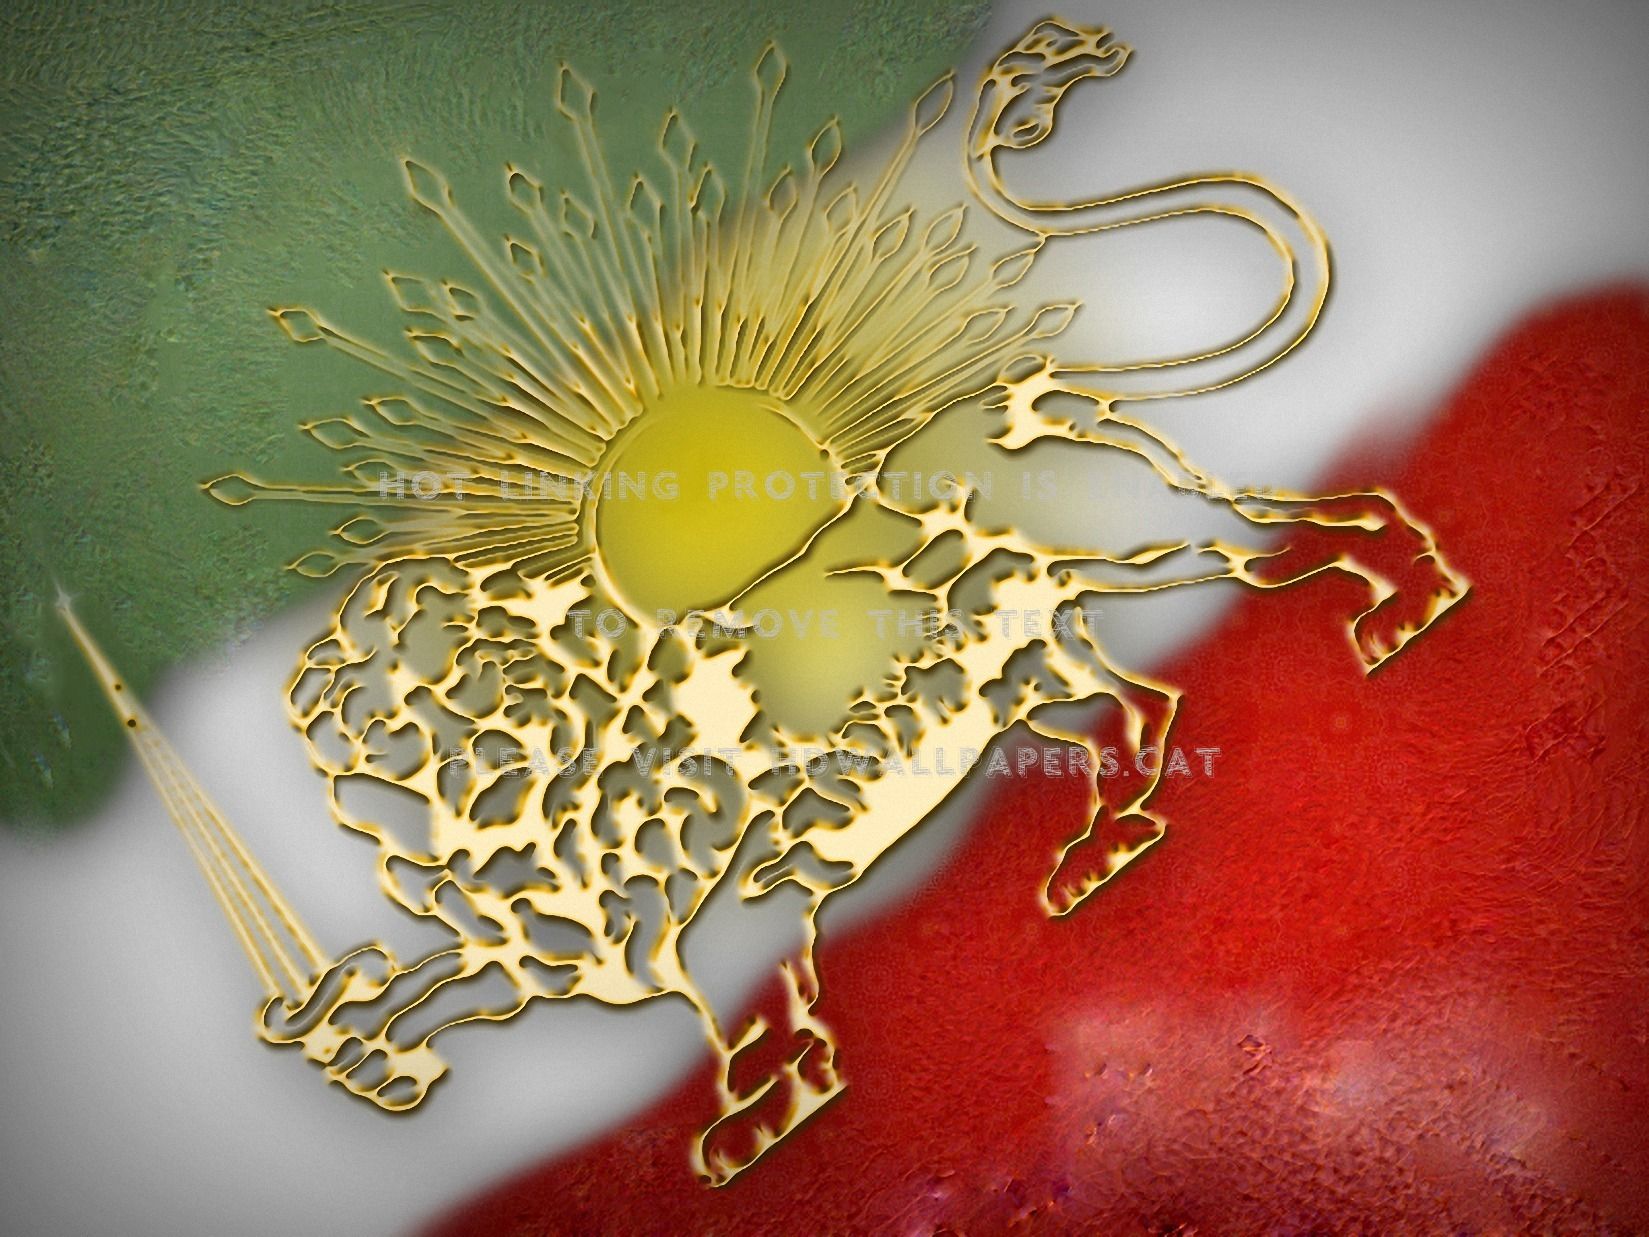 iranflag lion sun shiro khorshid persia